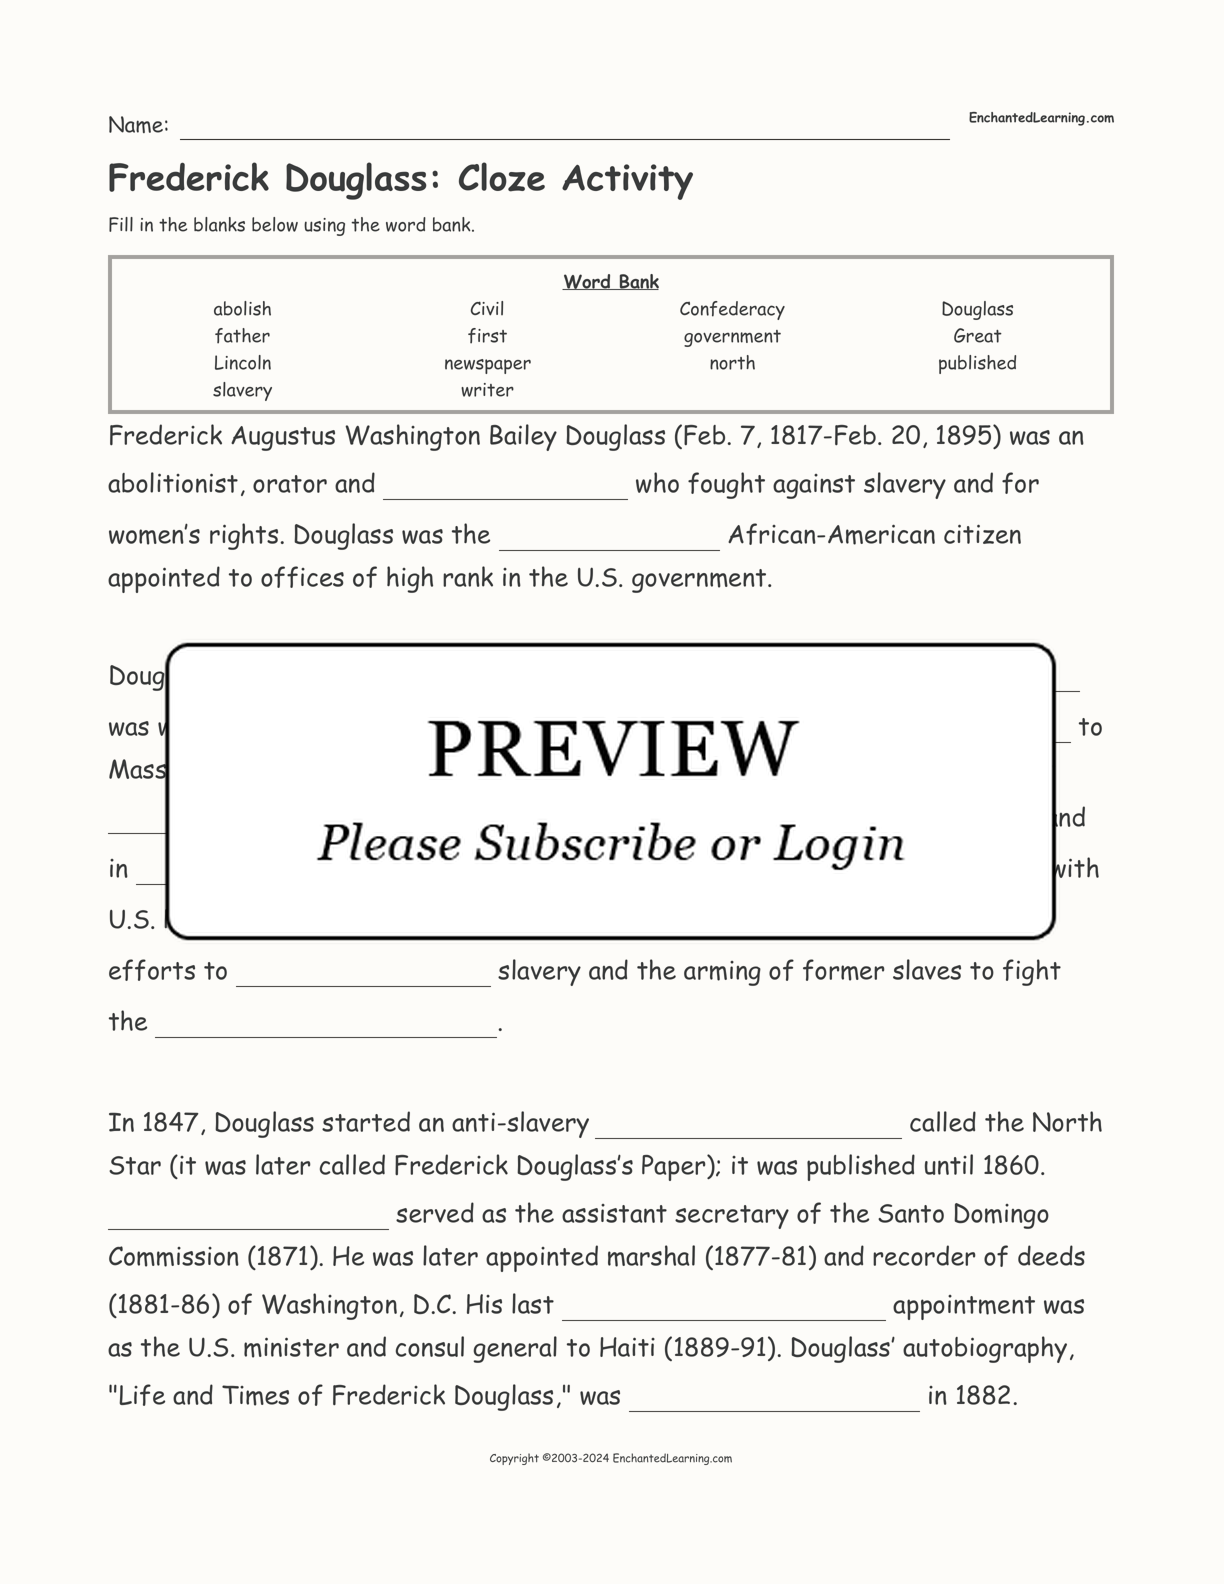 Frederick Douglass: Cloze Activity interactive worksheet page 1